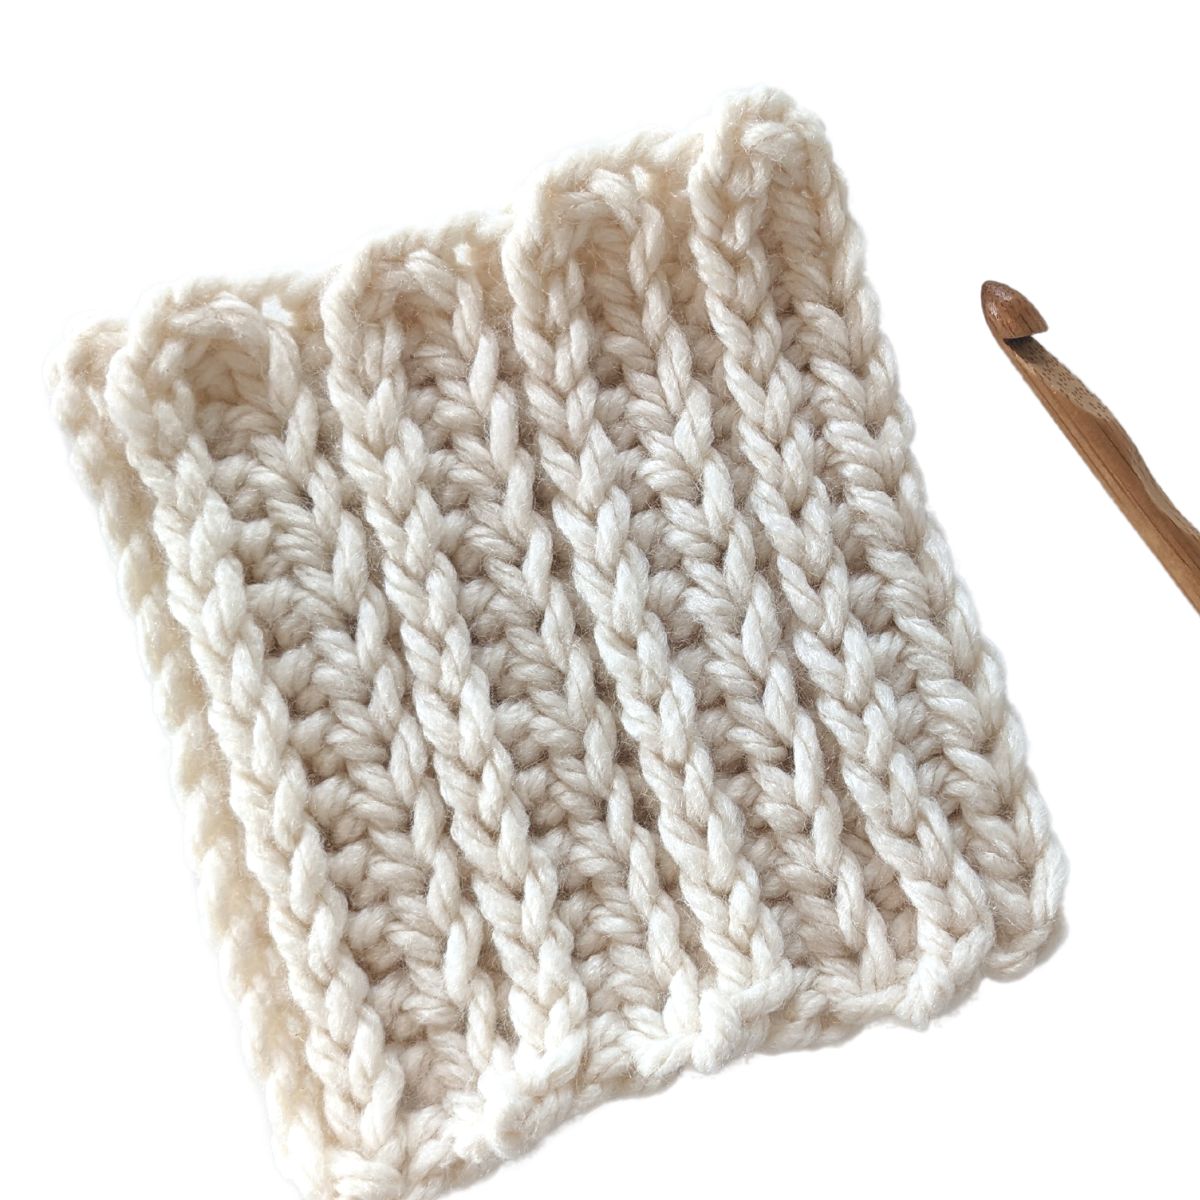 How to crochet a knit stitch